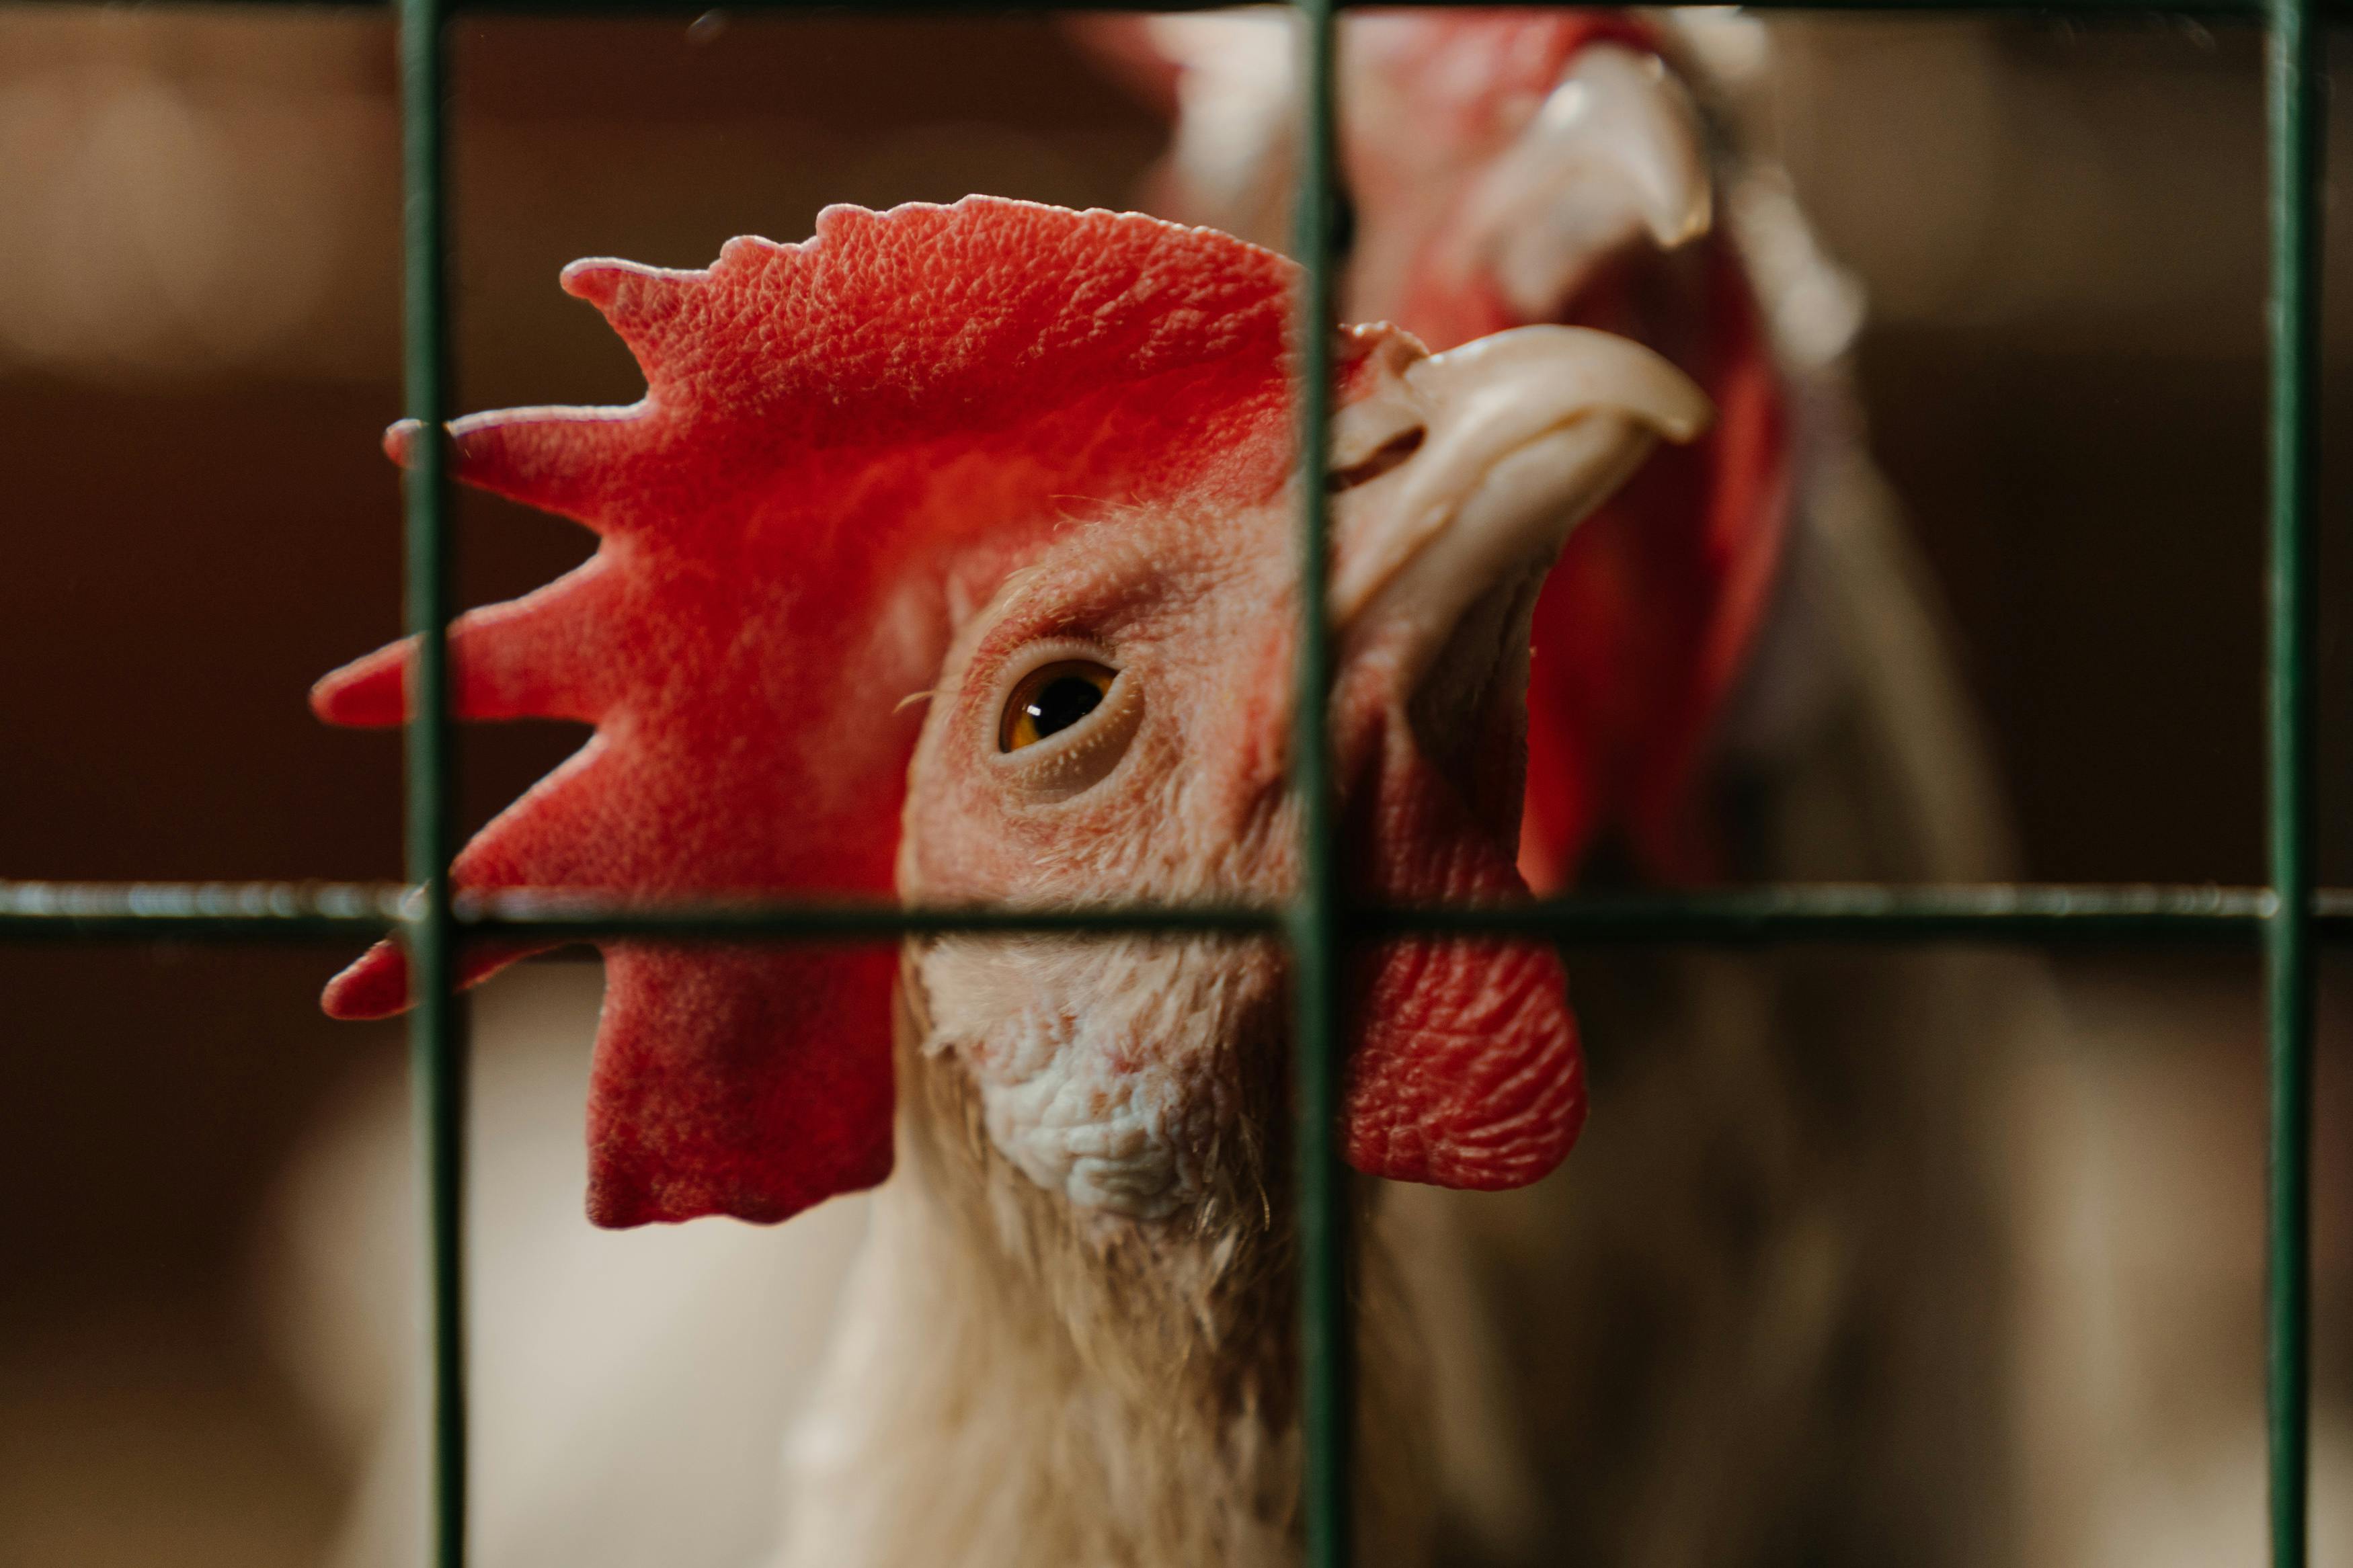 "Recognizing bird flu in chickens"